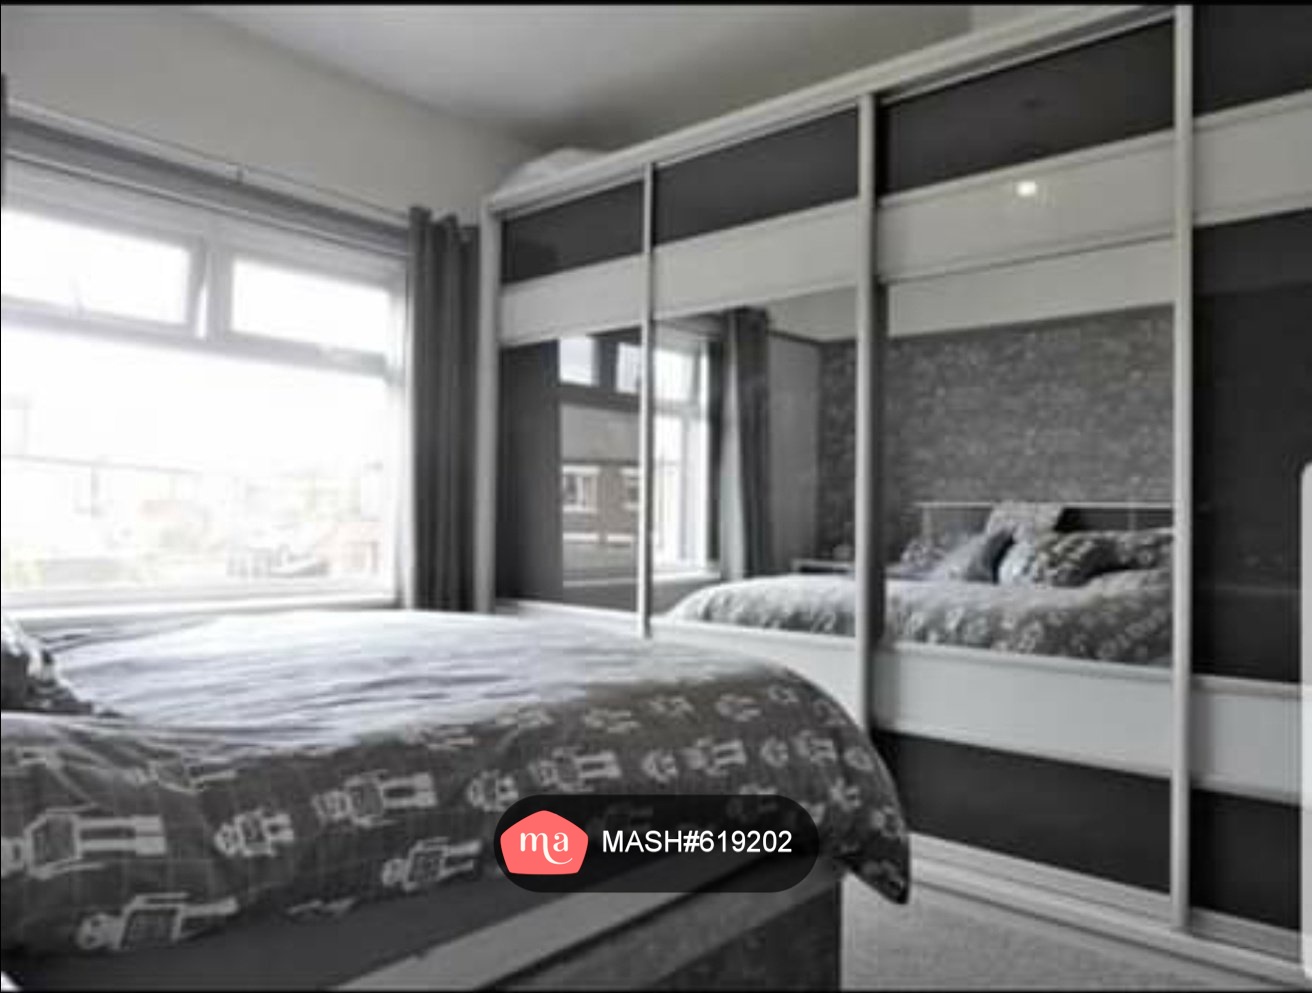 3 Bedroom Semi-detached to rent in Manchester - Mashroom